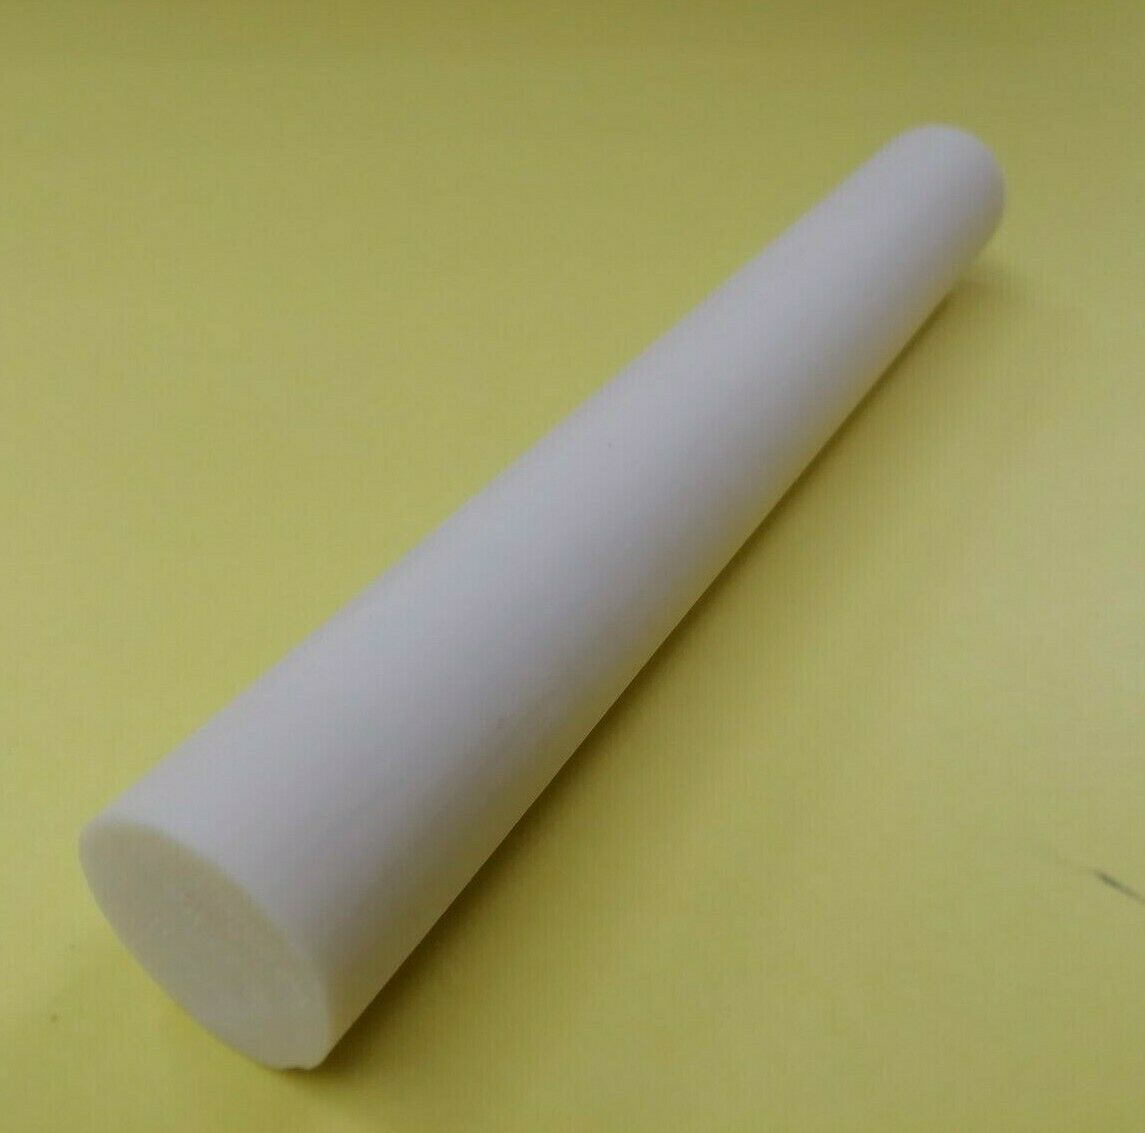 Polyester: Alternative Ivory Rod - UK Pen Blanks